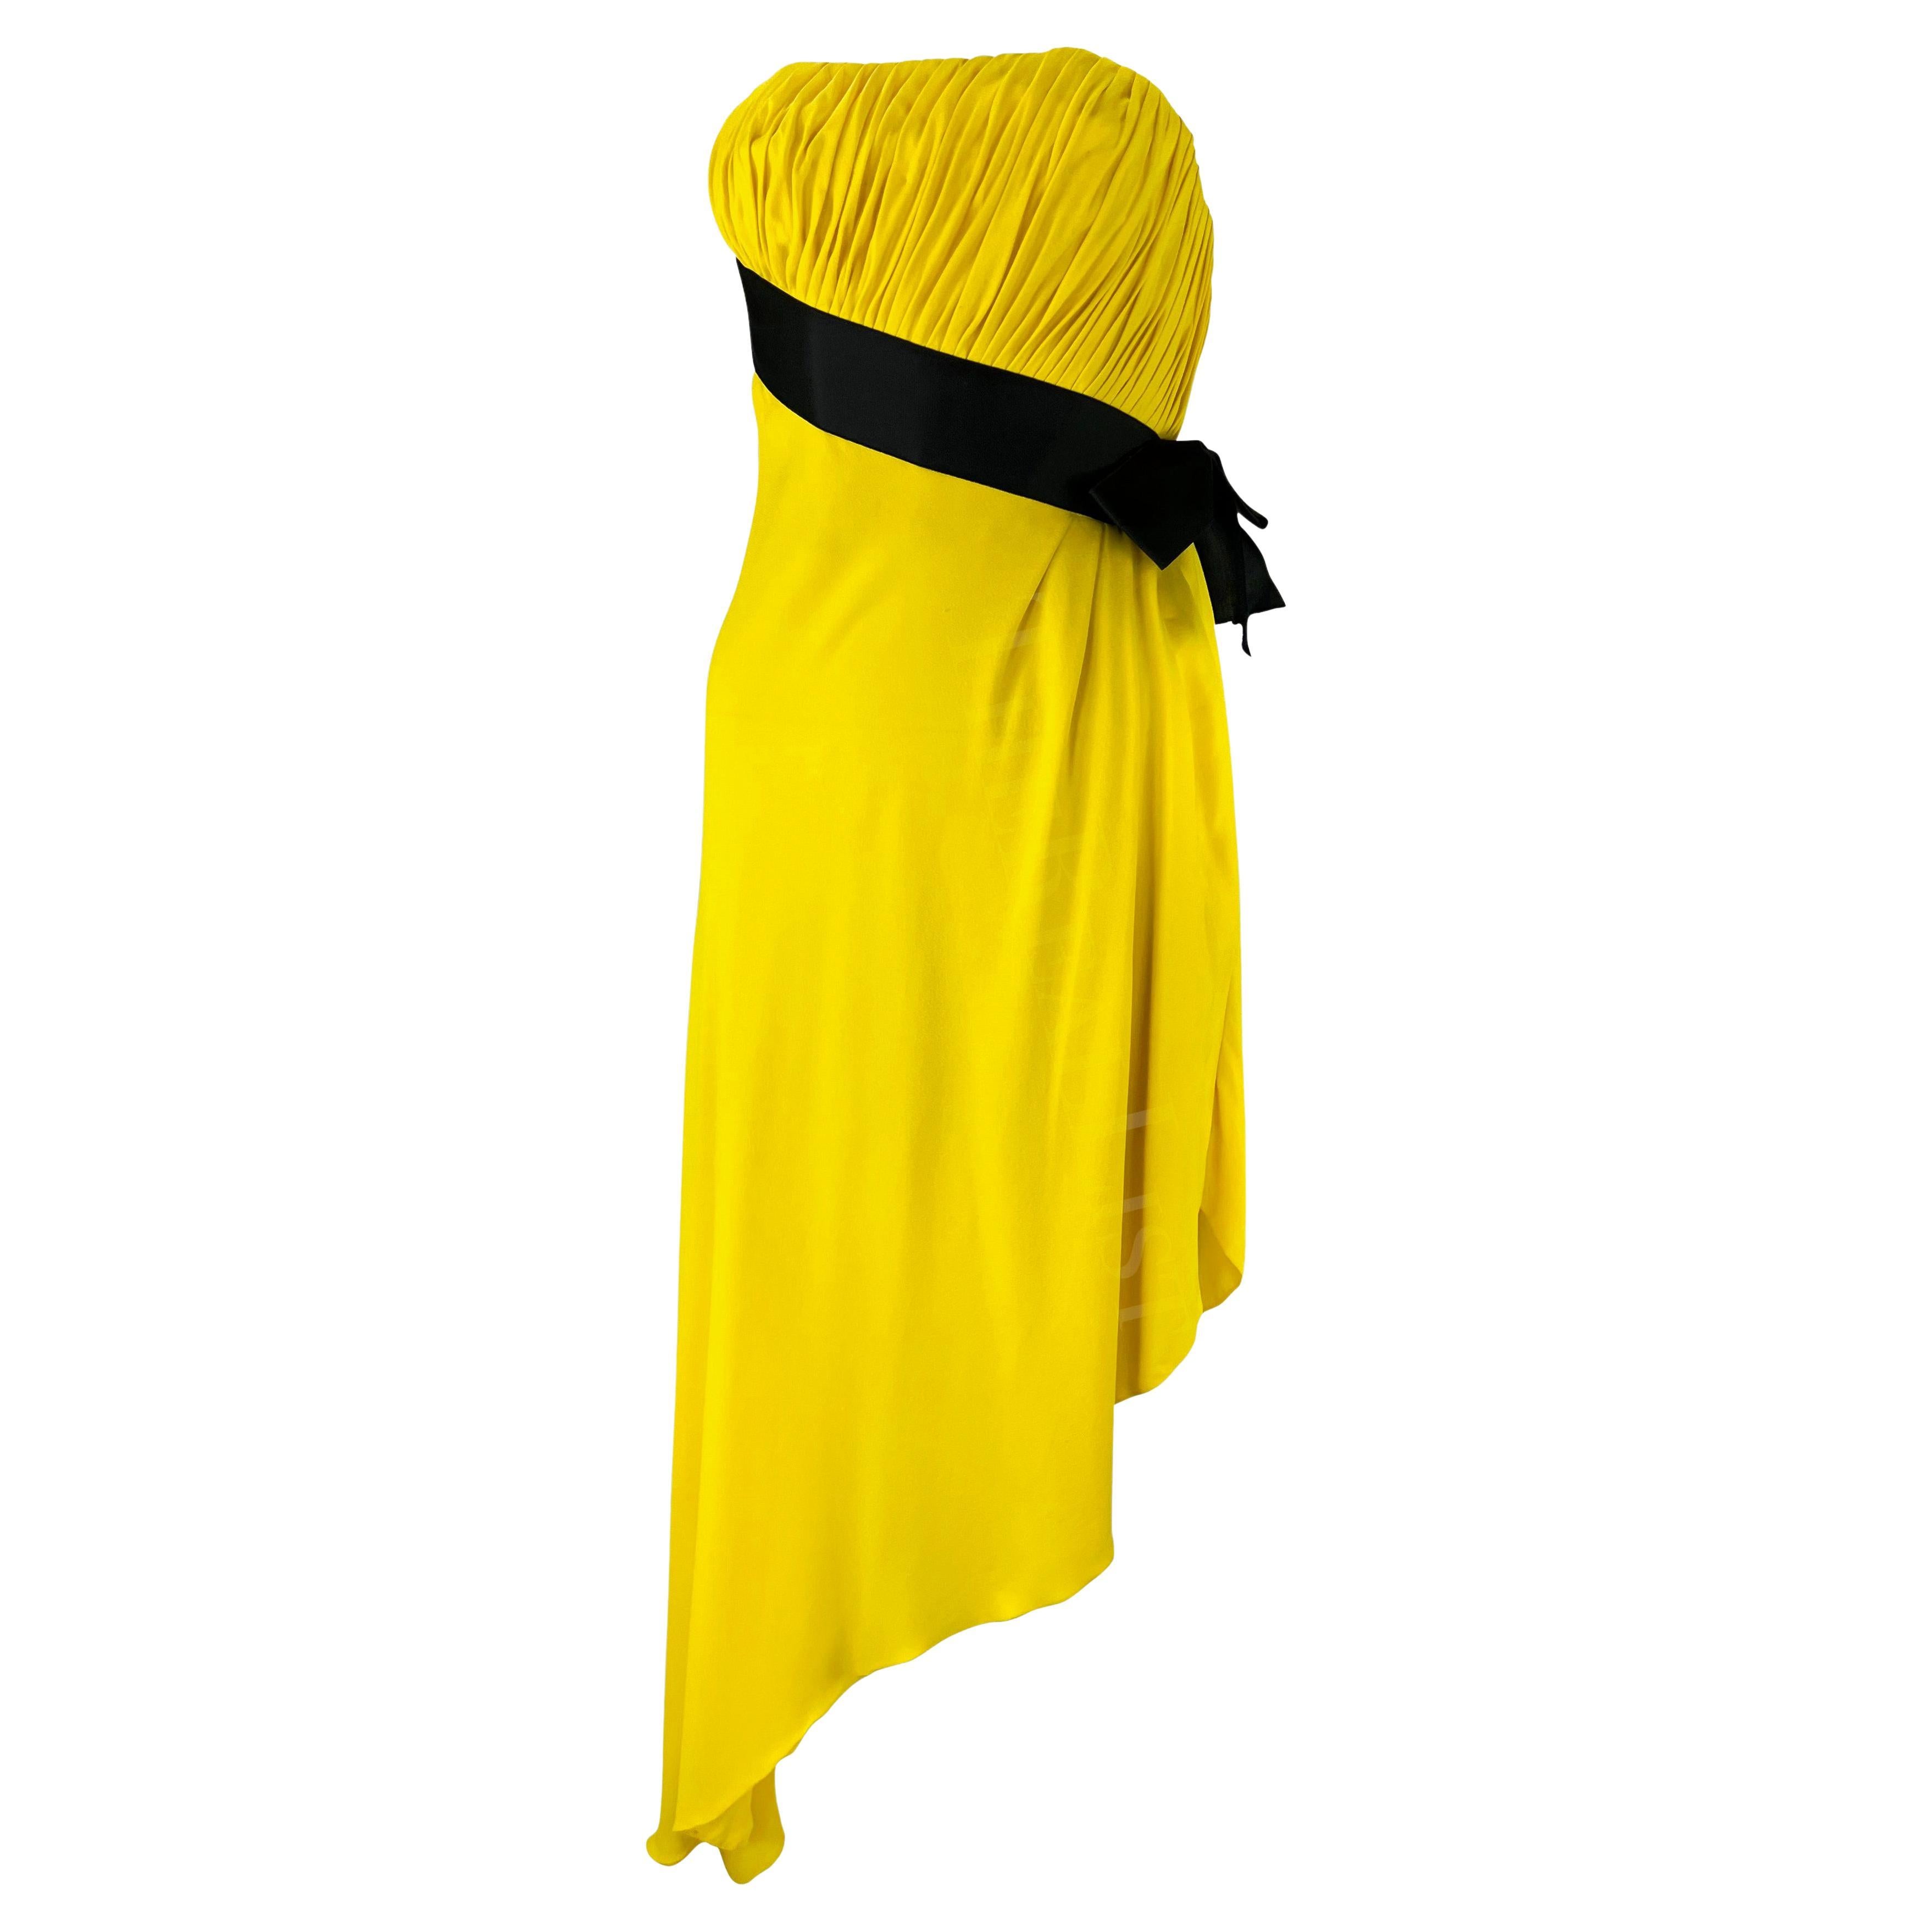 karl lagerfeld yellow dress